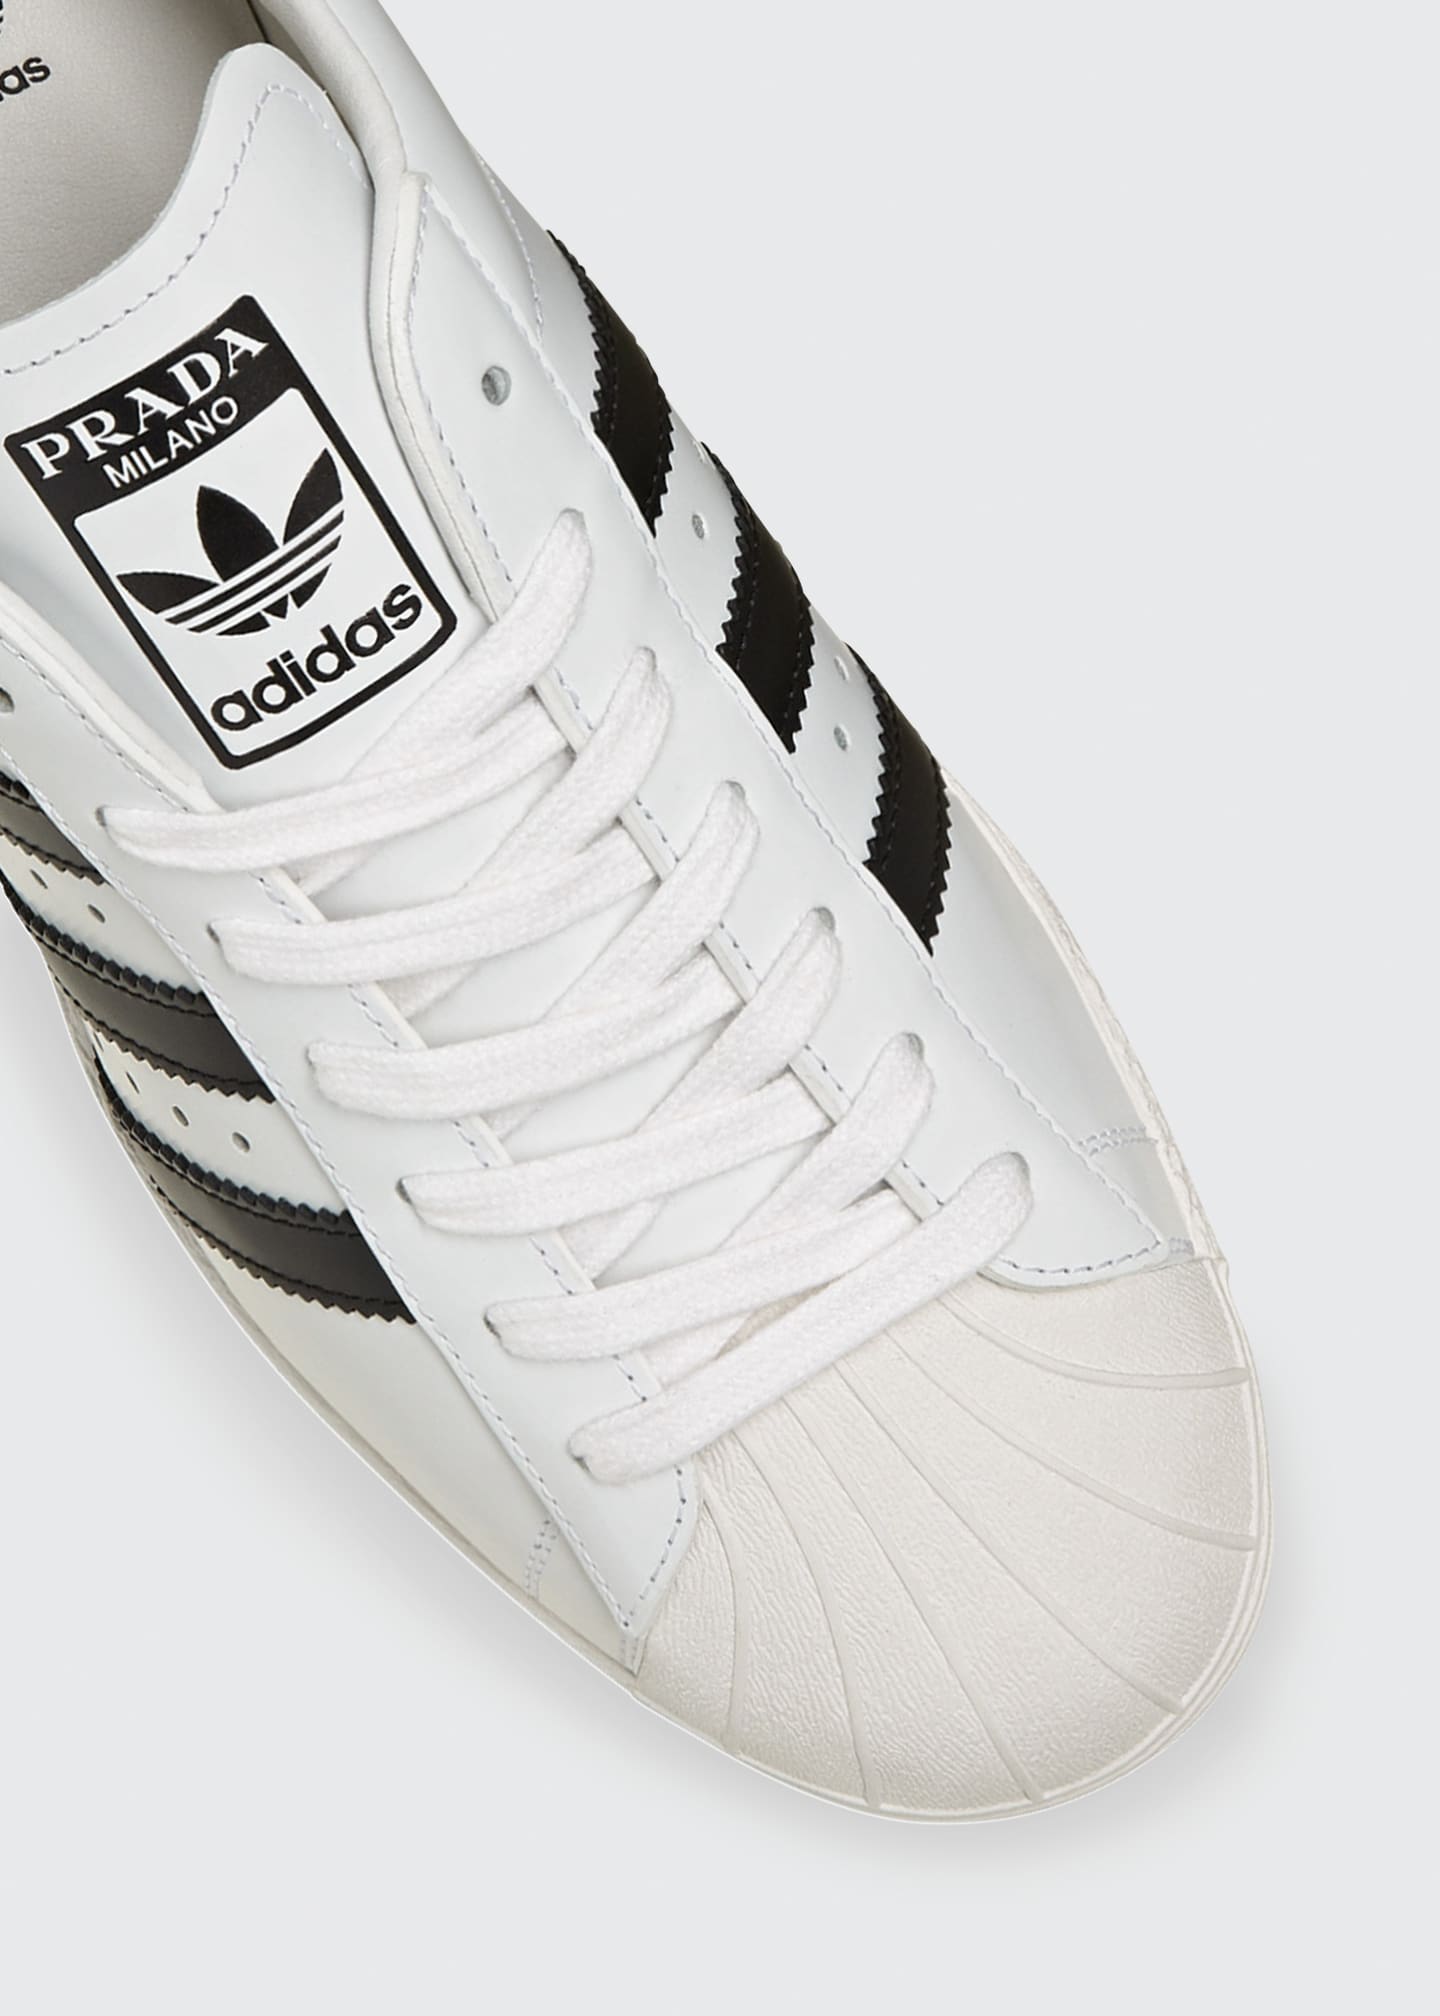 Adidas x Prada x Prada Superstar Bicolor Classic Sneakers - Bergdorf ...